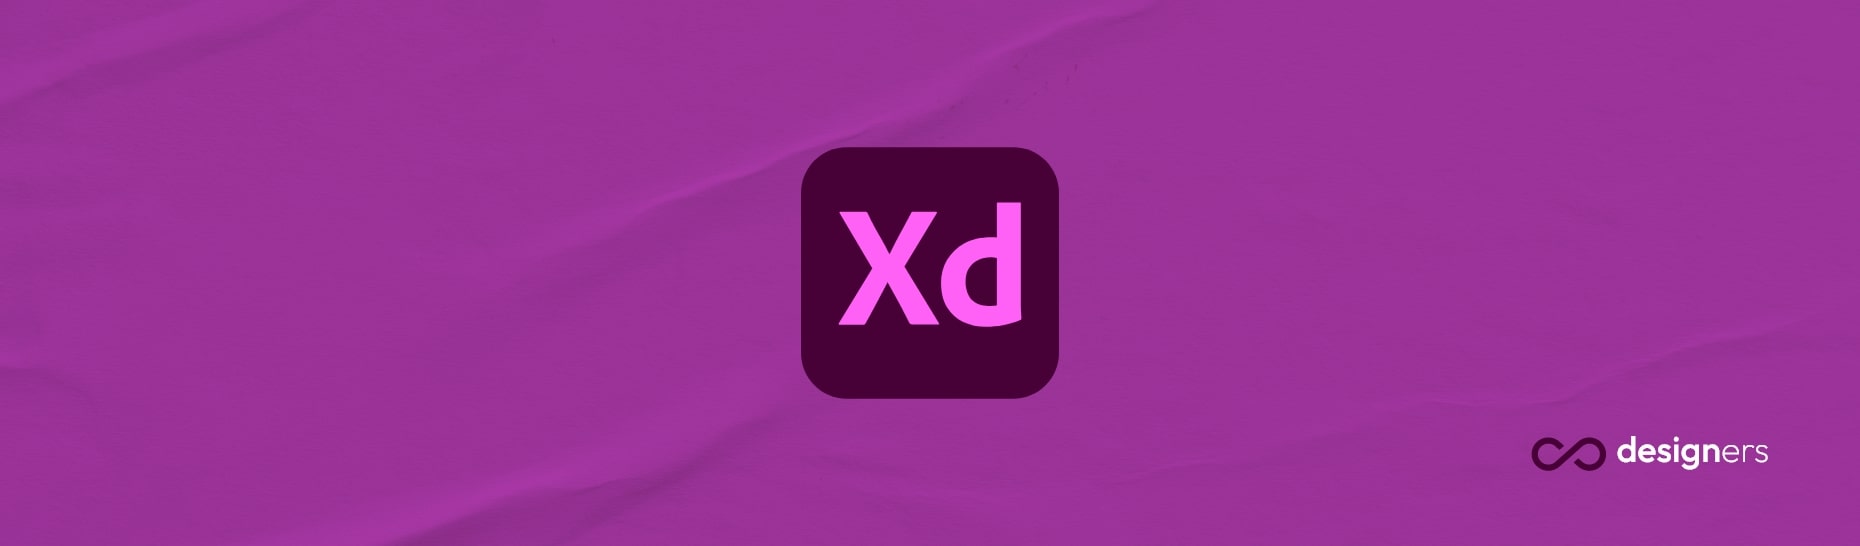 Is learning Adobe XD hard?